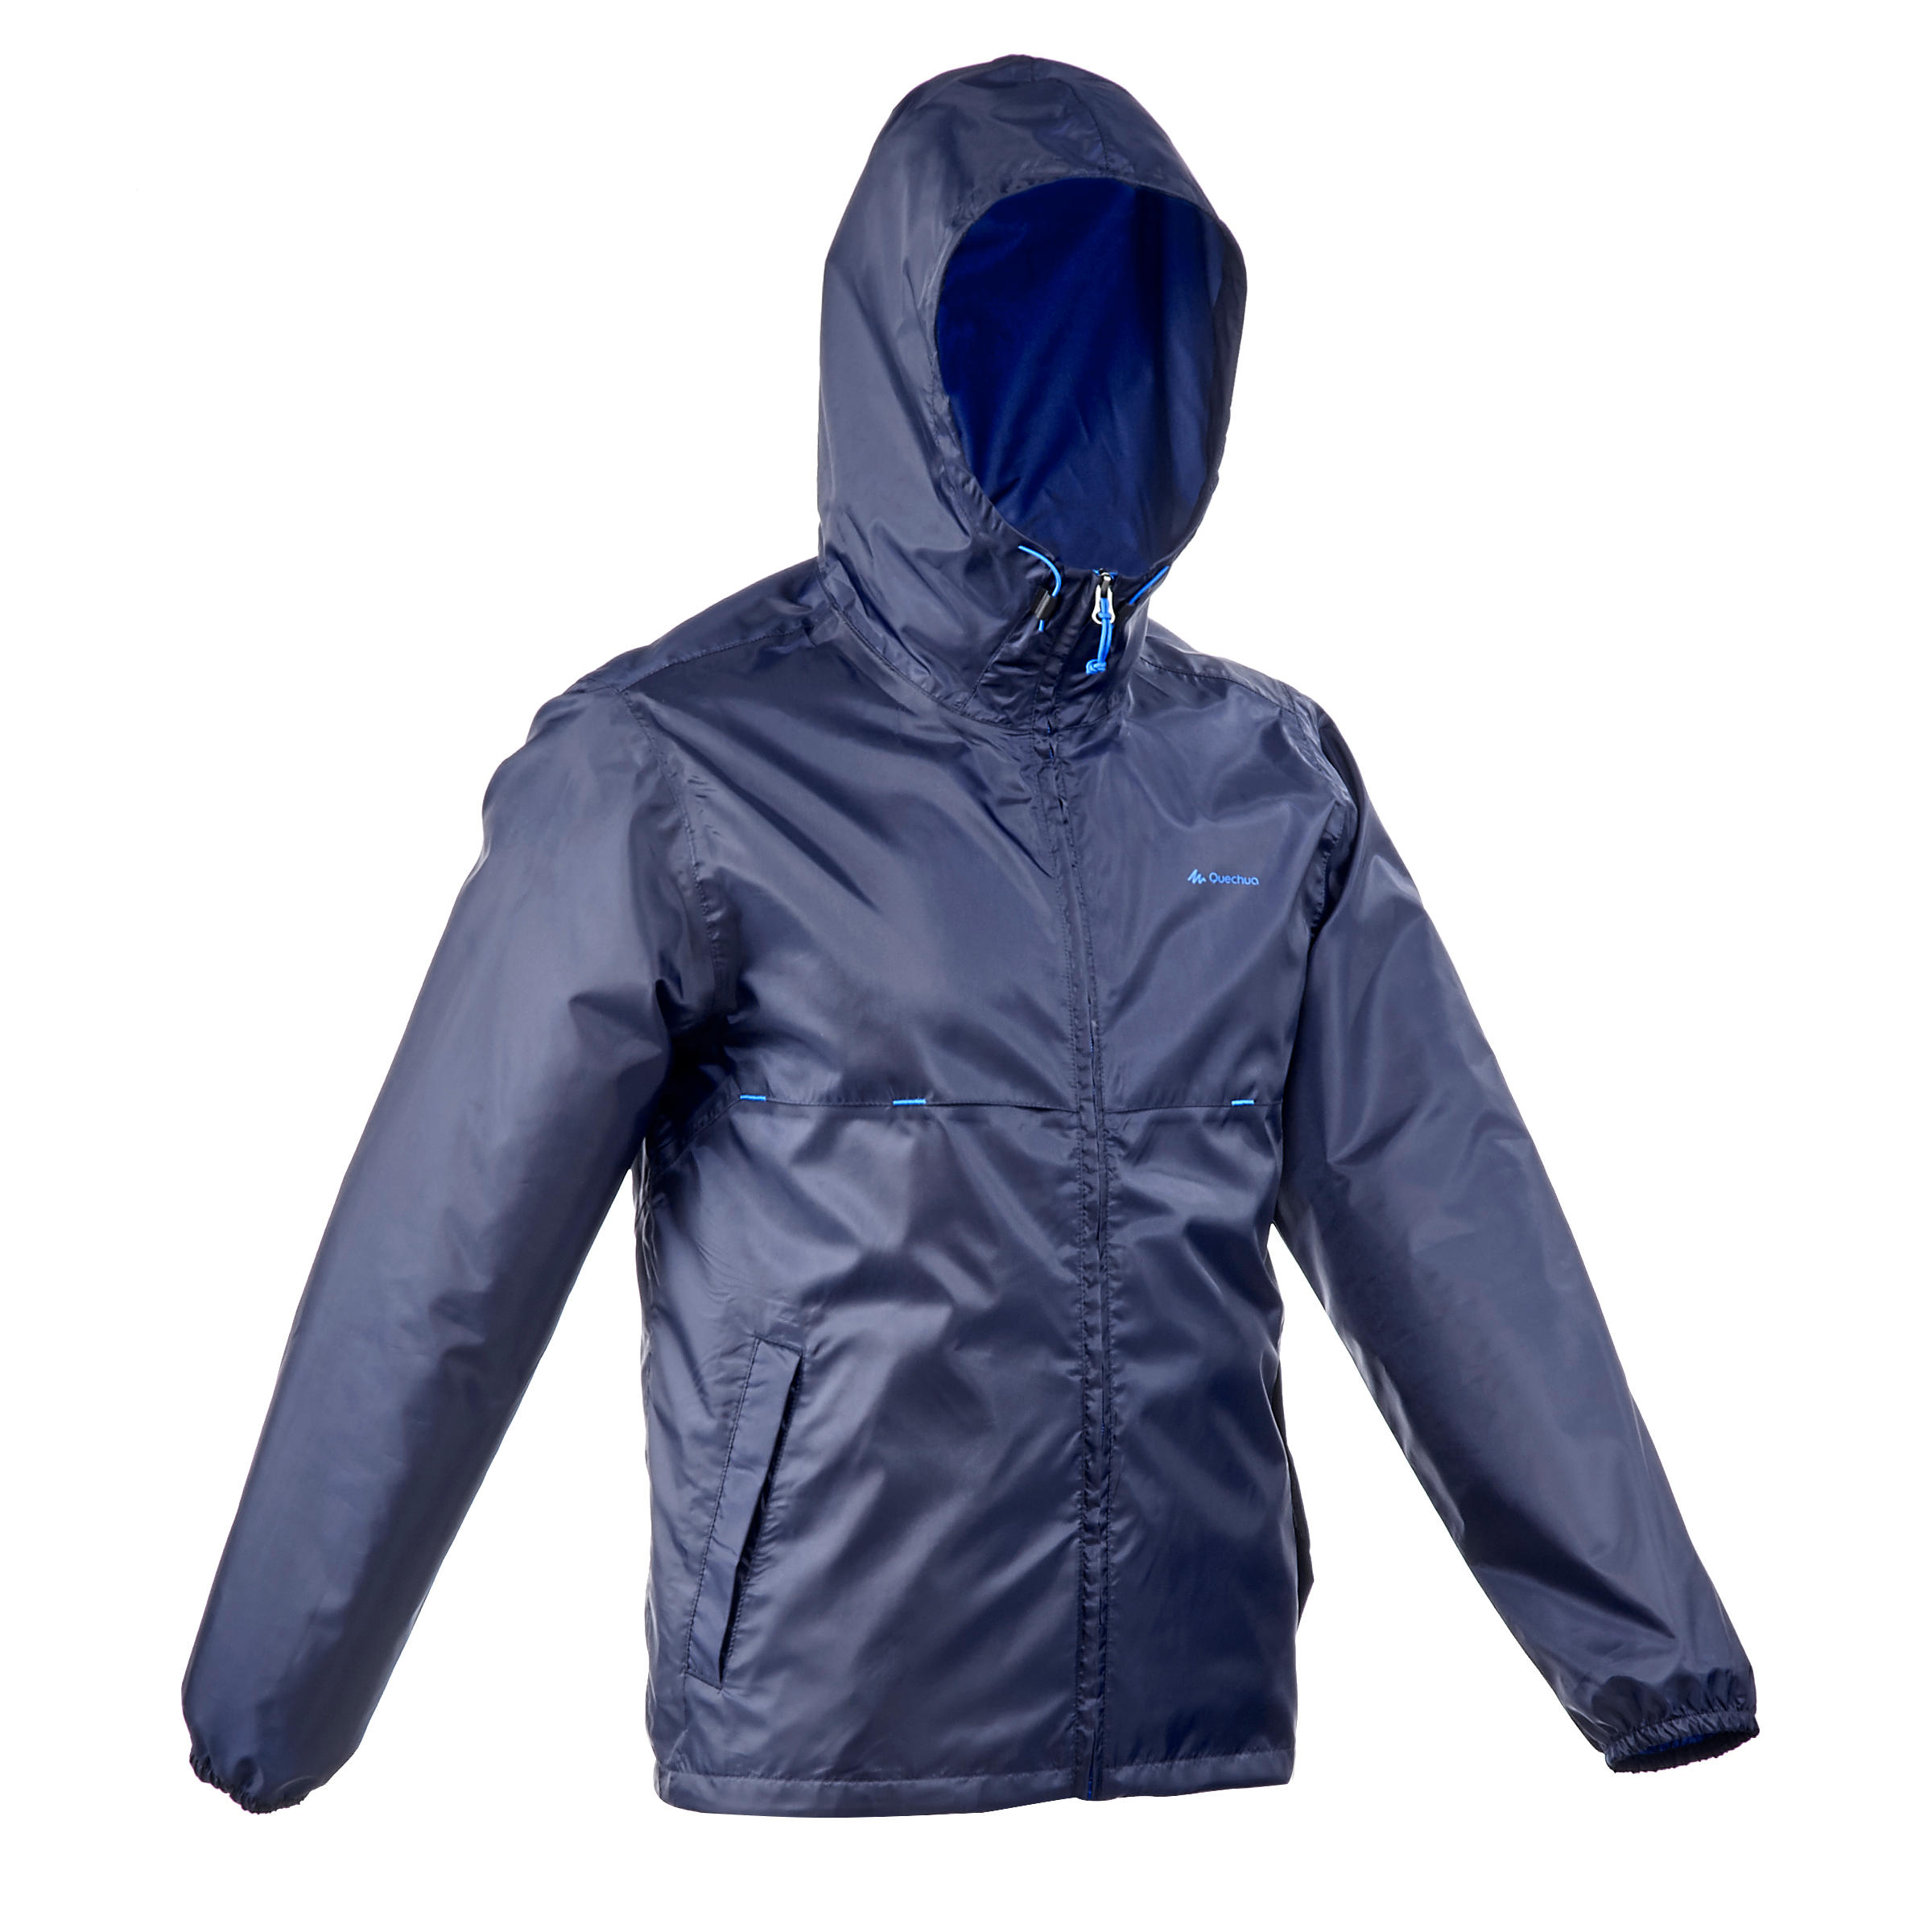 Full Zip Raincut Jacket|Decathlon 